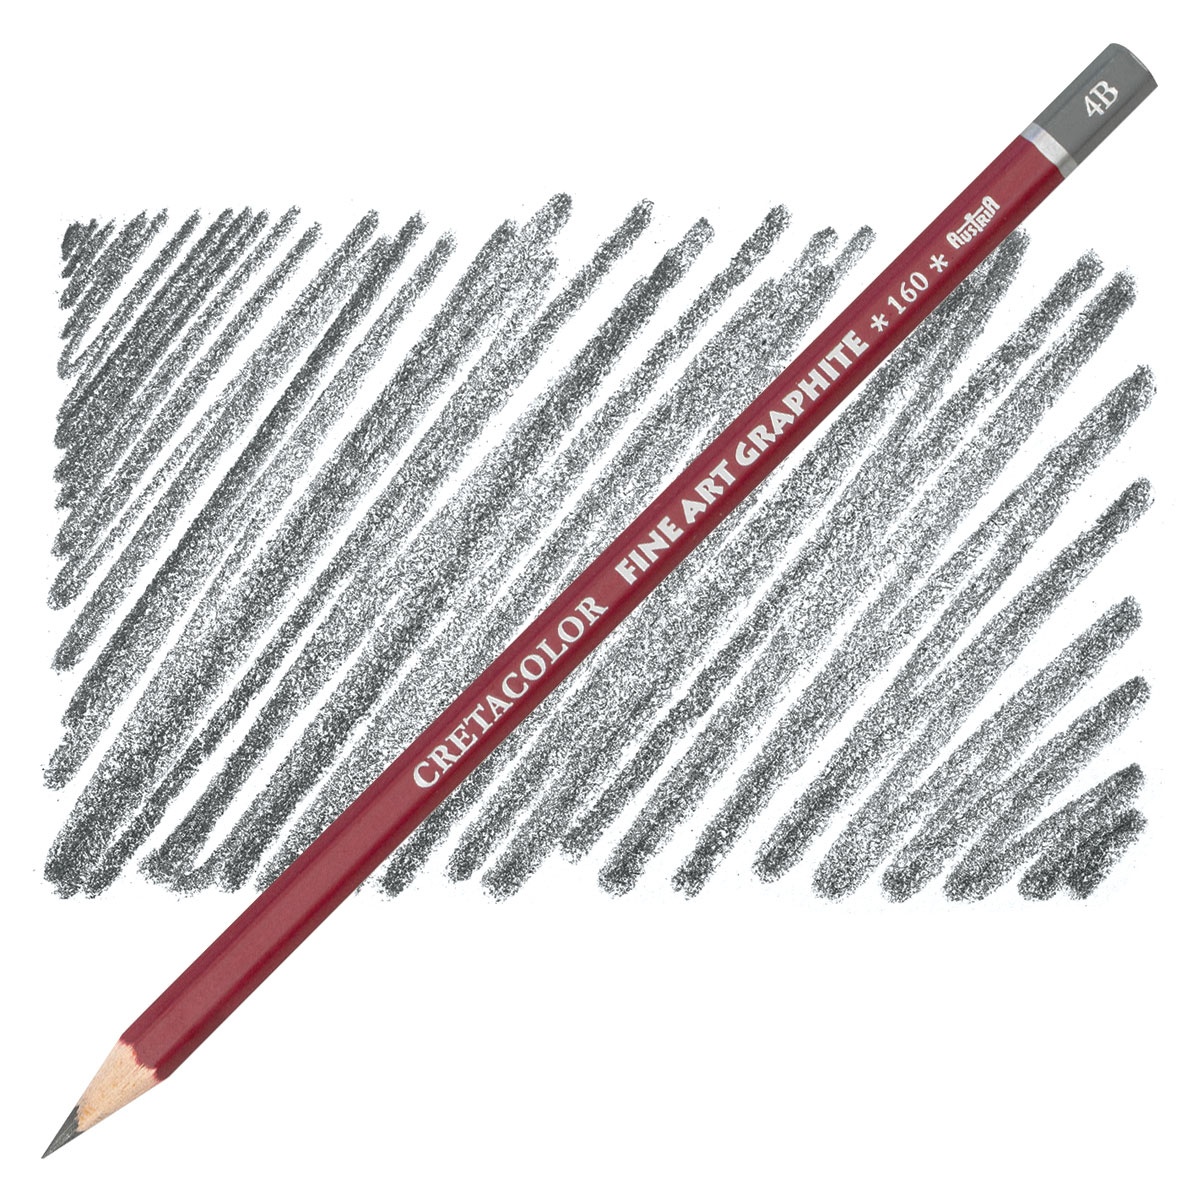 Cretacolor Fine Art Graphite Pencils and Set